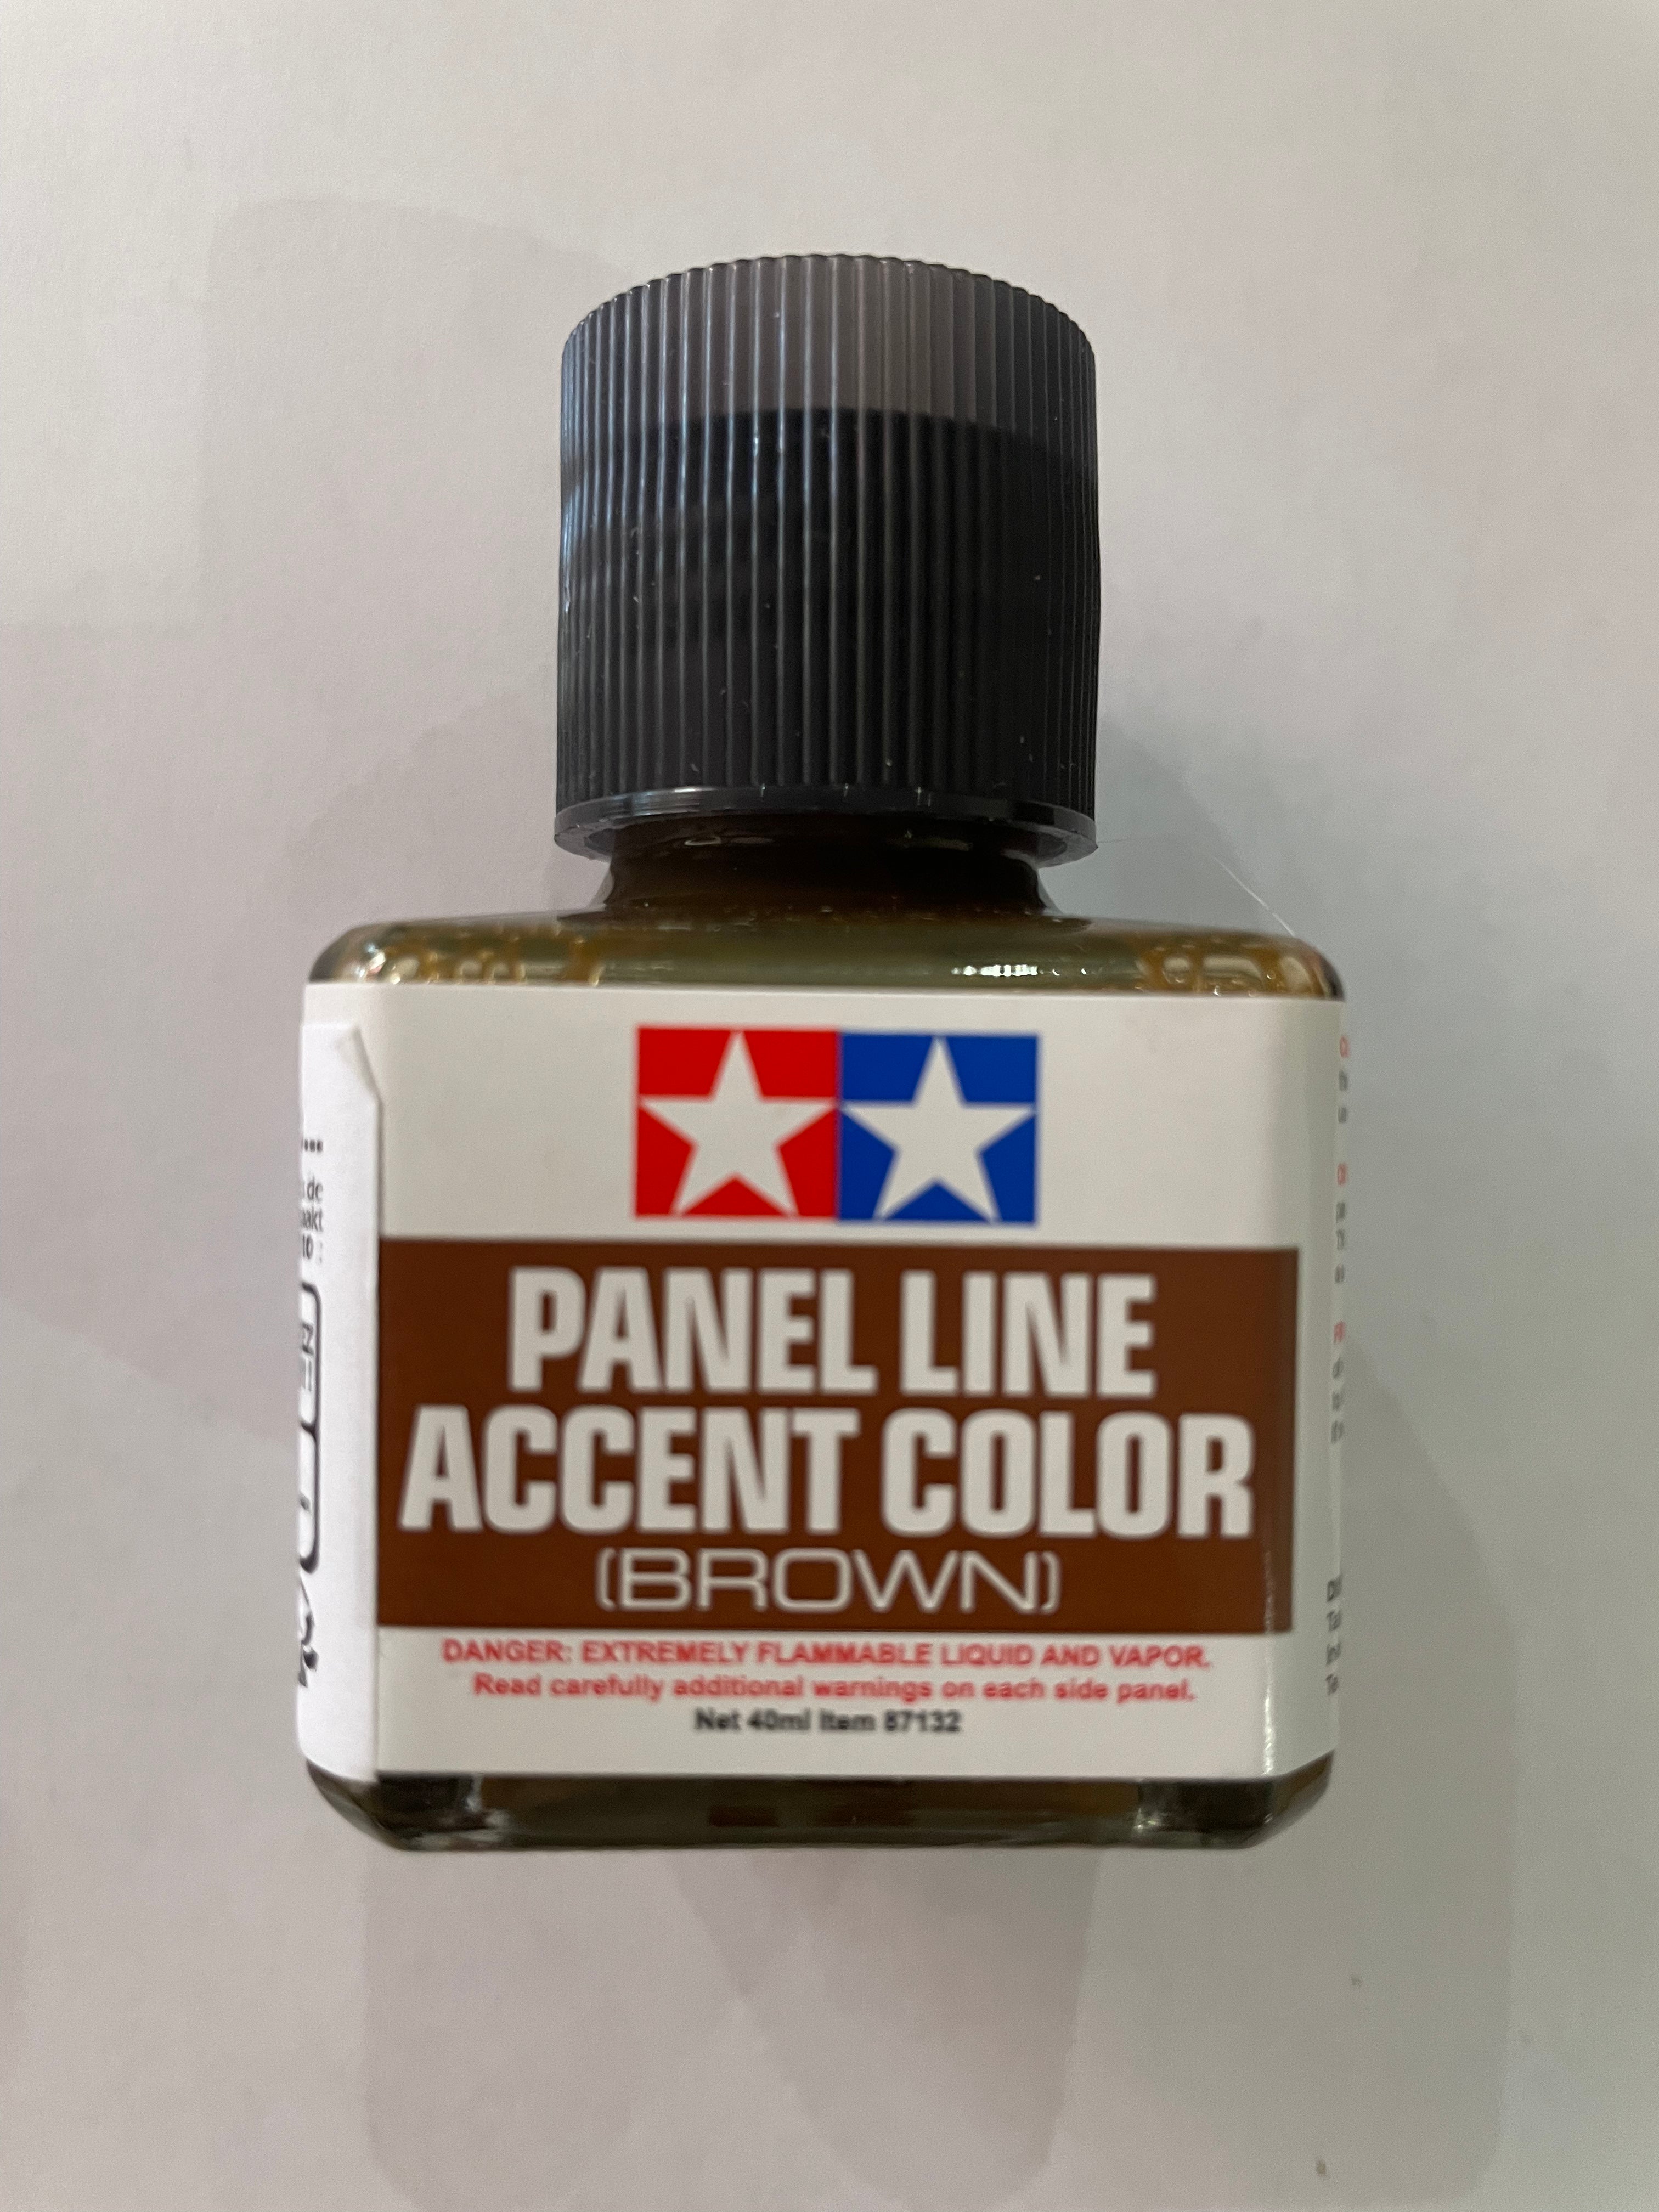 Tamiya Panel Line Accent Color Dark Brown Paint, 40Ml Bottle